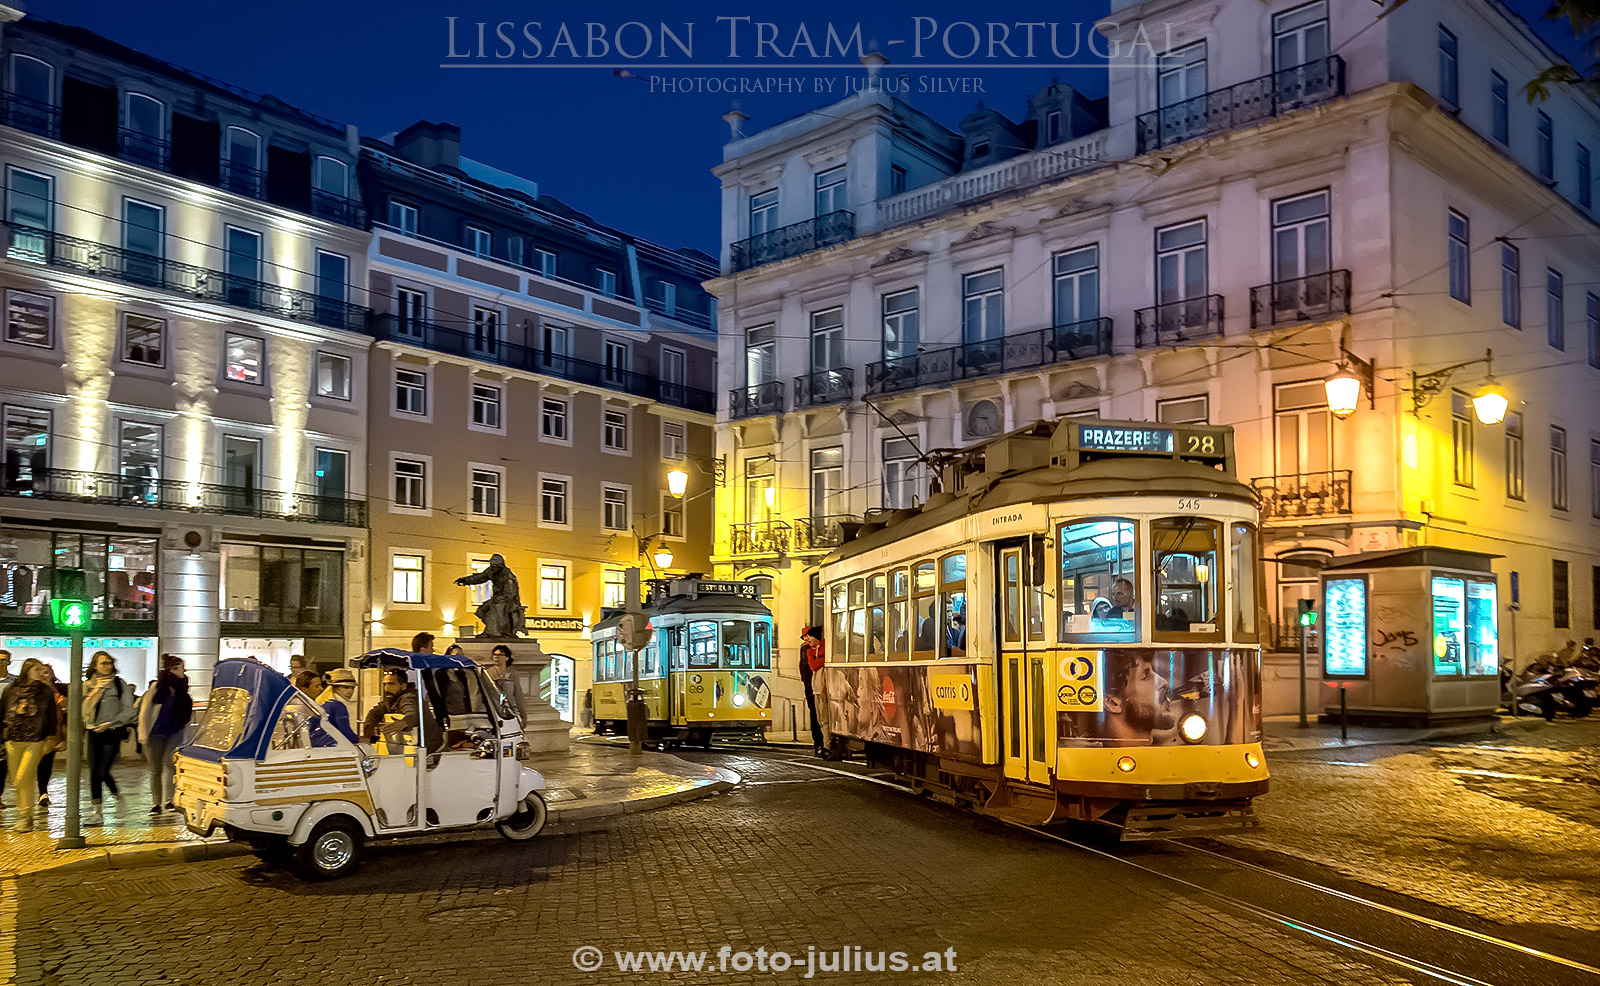 005a_Lisboa_Lissabon.jpg, 649kB